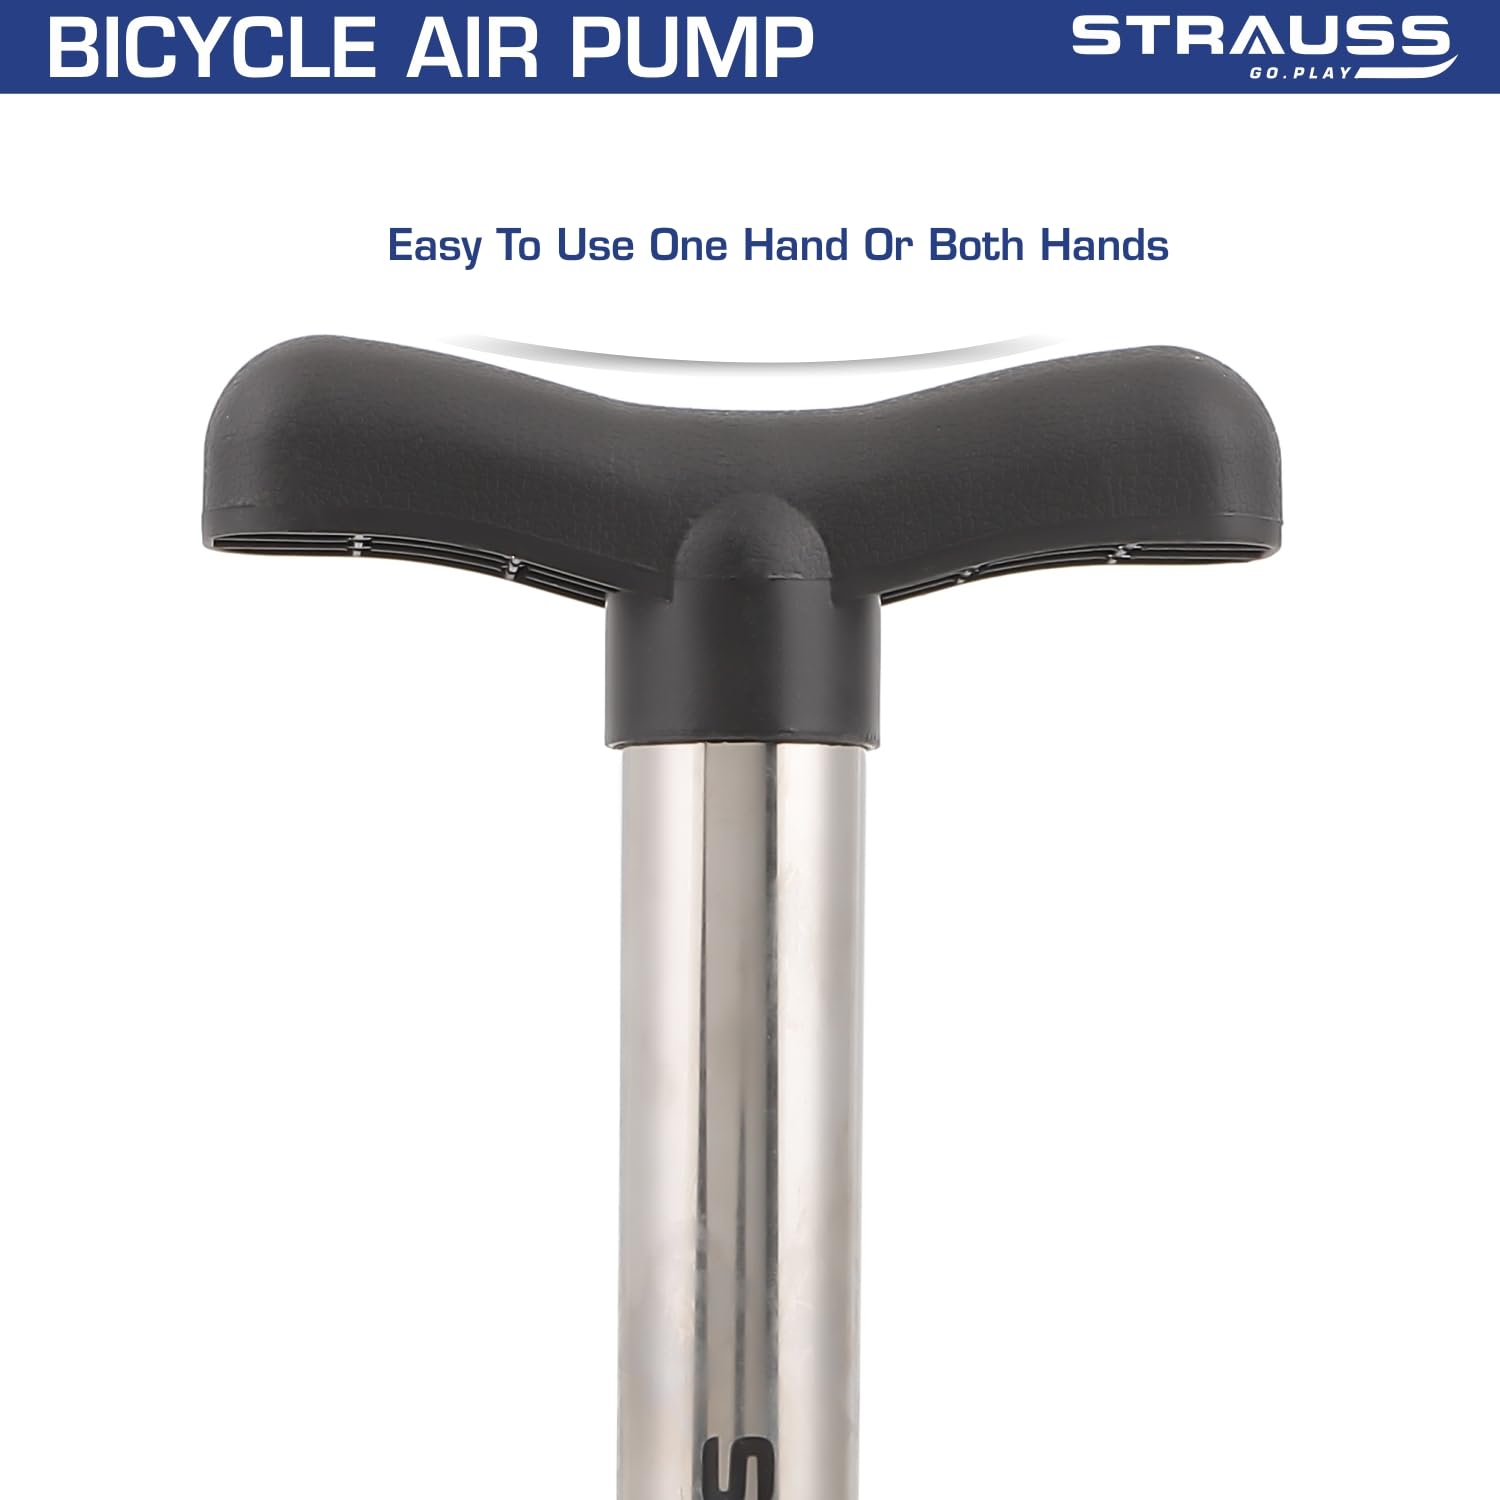 Strauss High Pressure Multipurpose Air Pump | Inflatable Air Pump | Floor Air Pumps for Bicycle, Car, Ball, Motorcycle,(Silver)